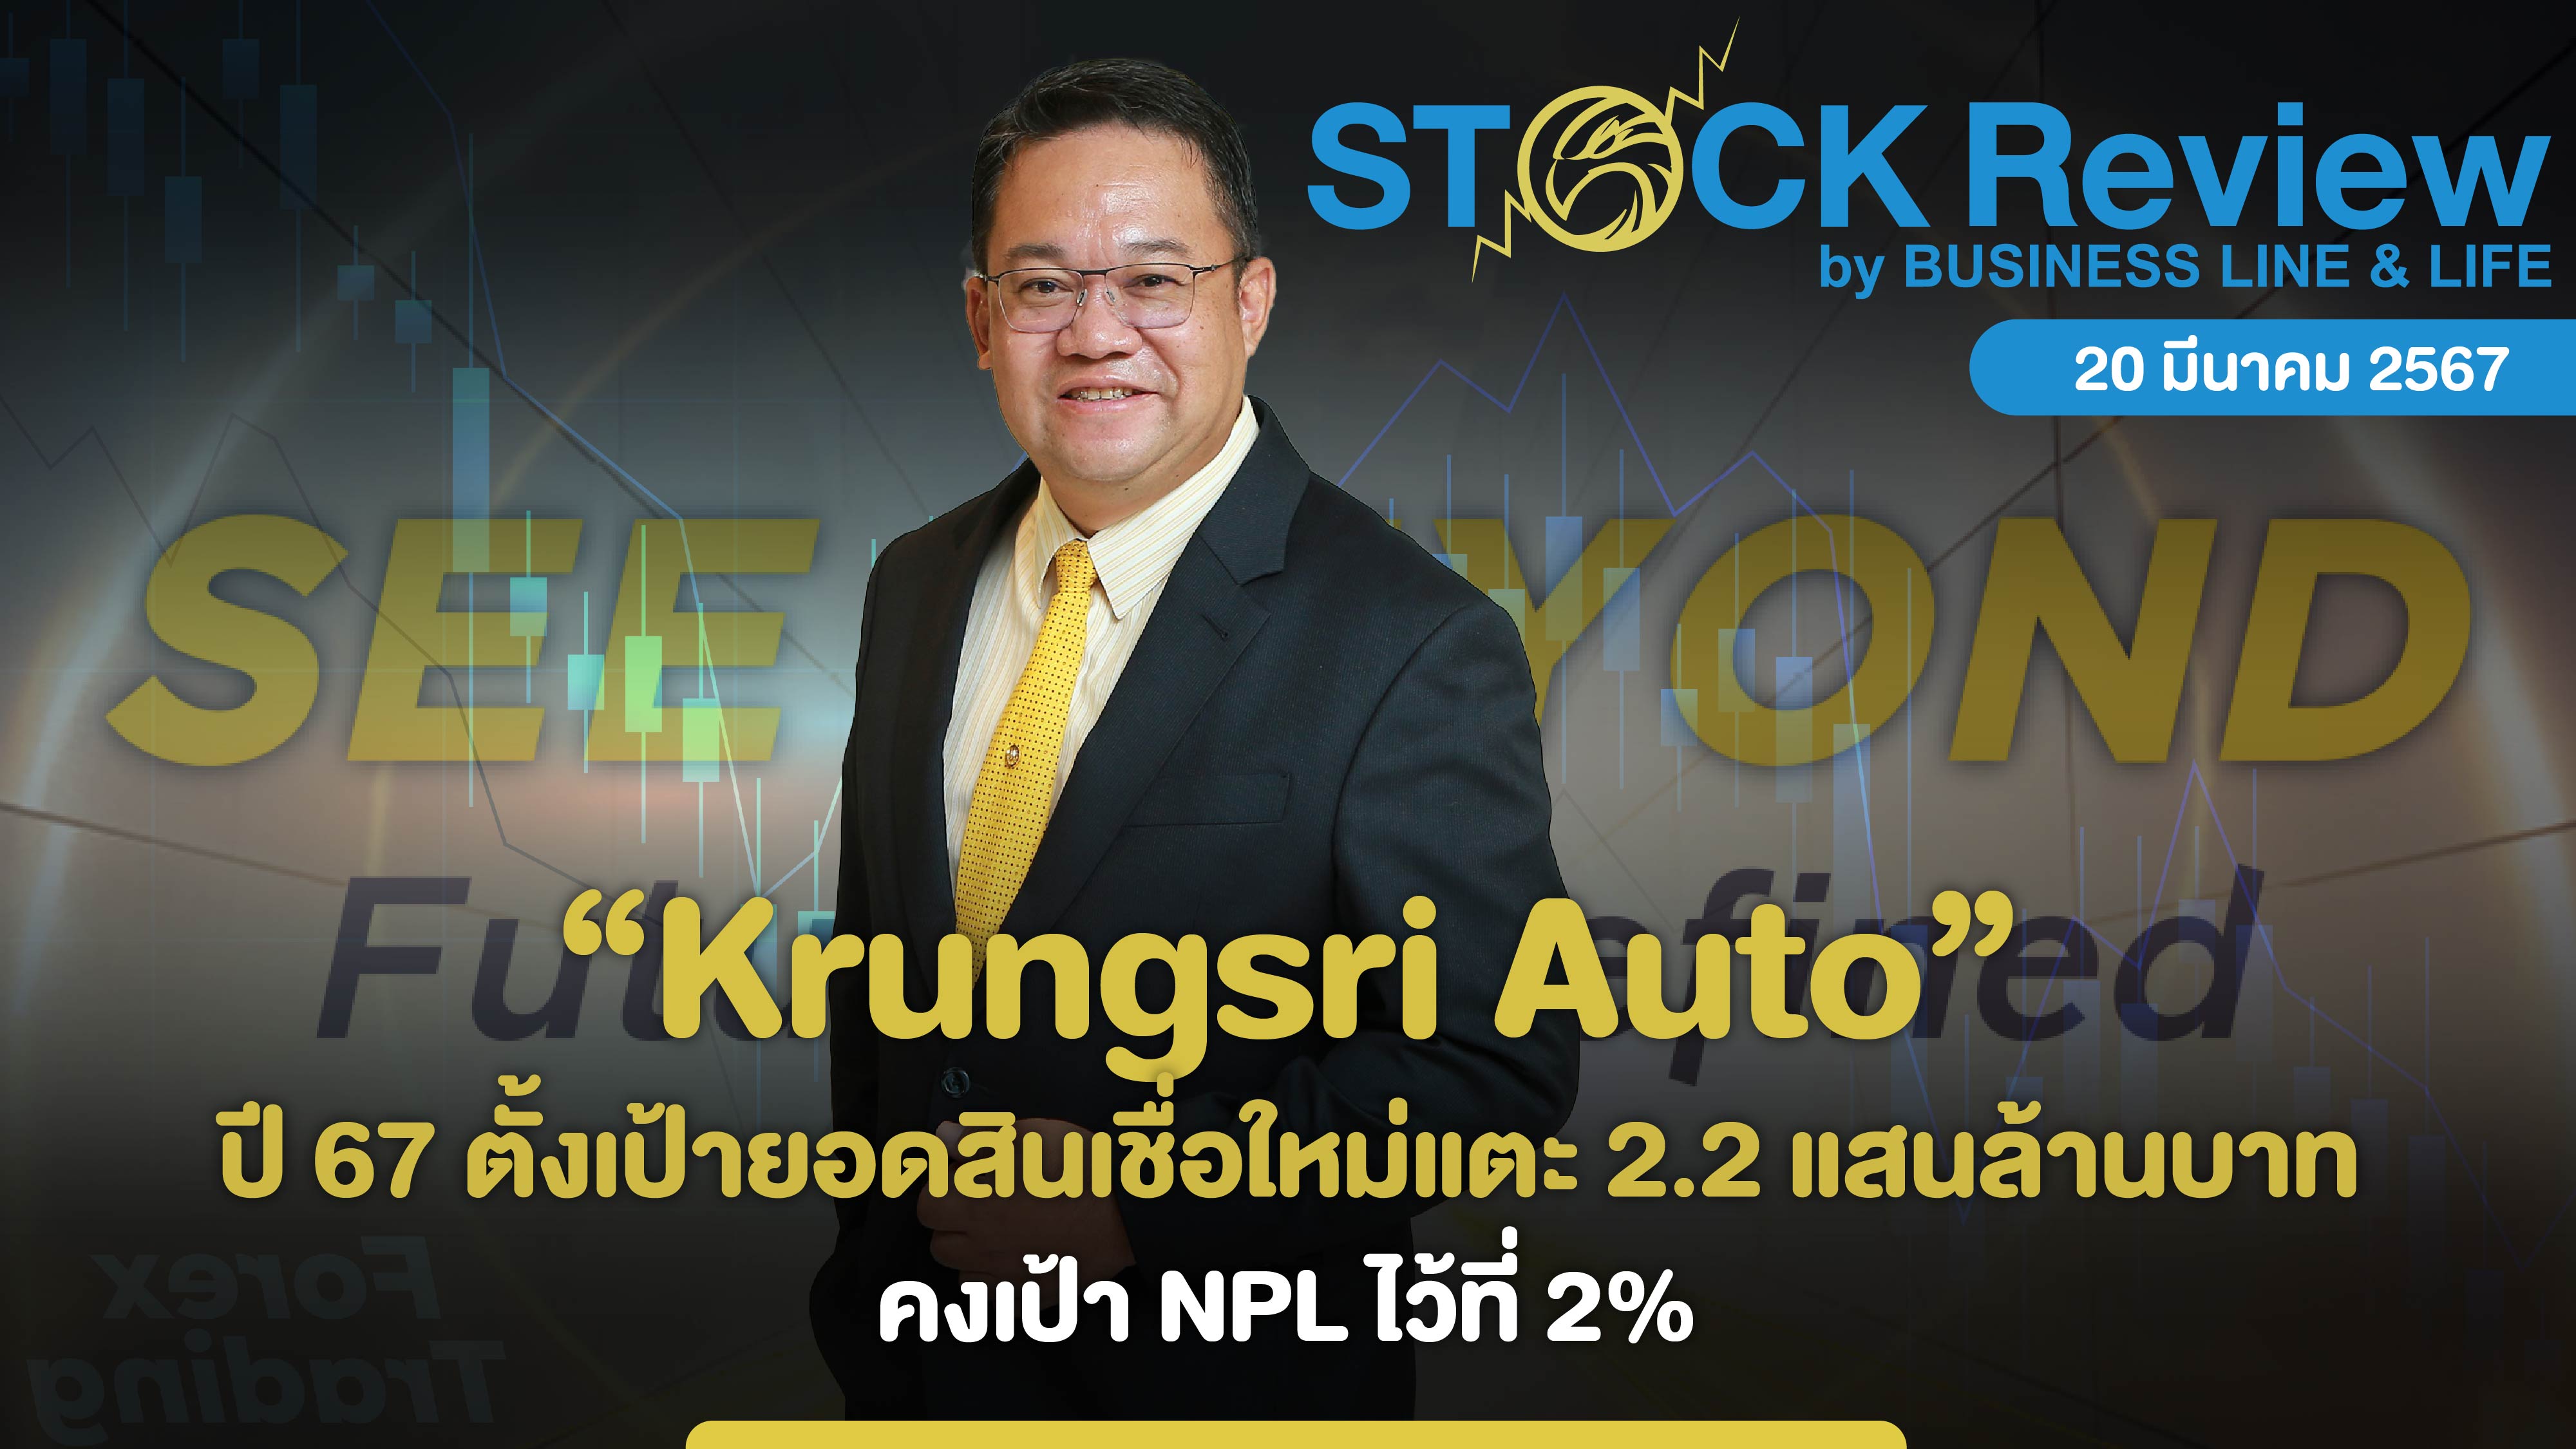 Krungsri Auto ปี 67 ตั้งเป้ายอดสินเชื่อใหม่แตะ 2.2 แสนล้านบาท คงเป้า NPL ไว้ที่ 2%